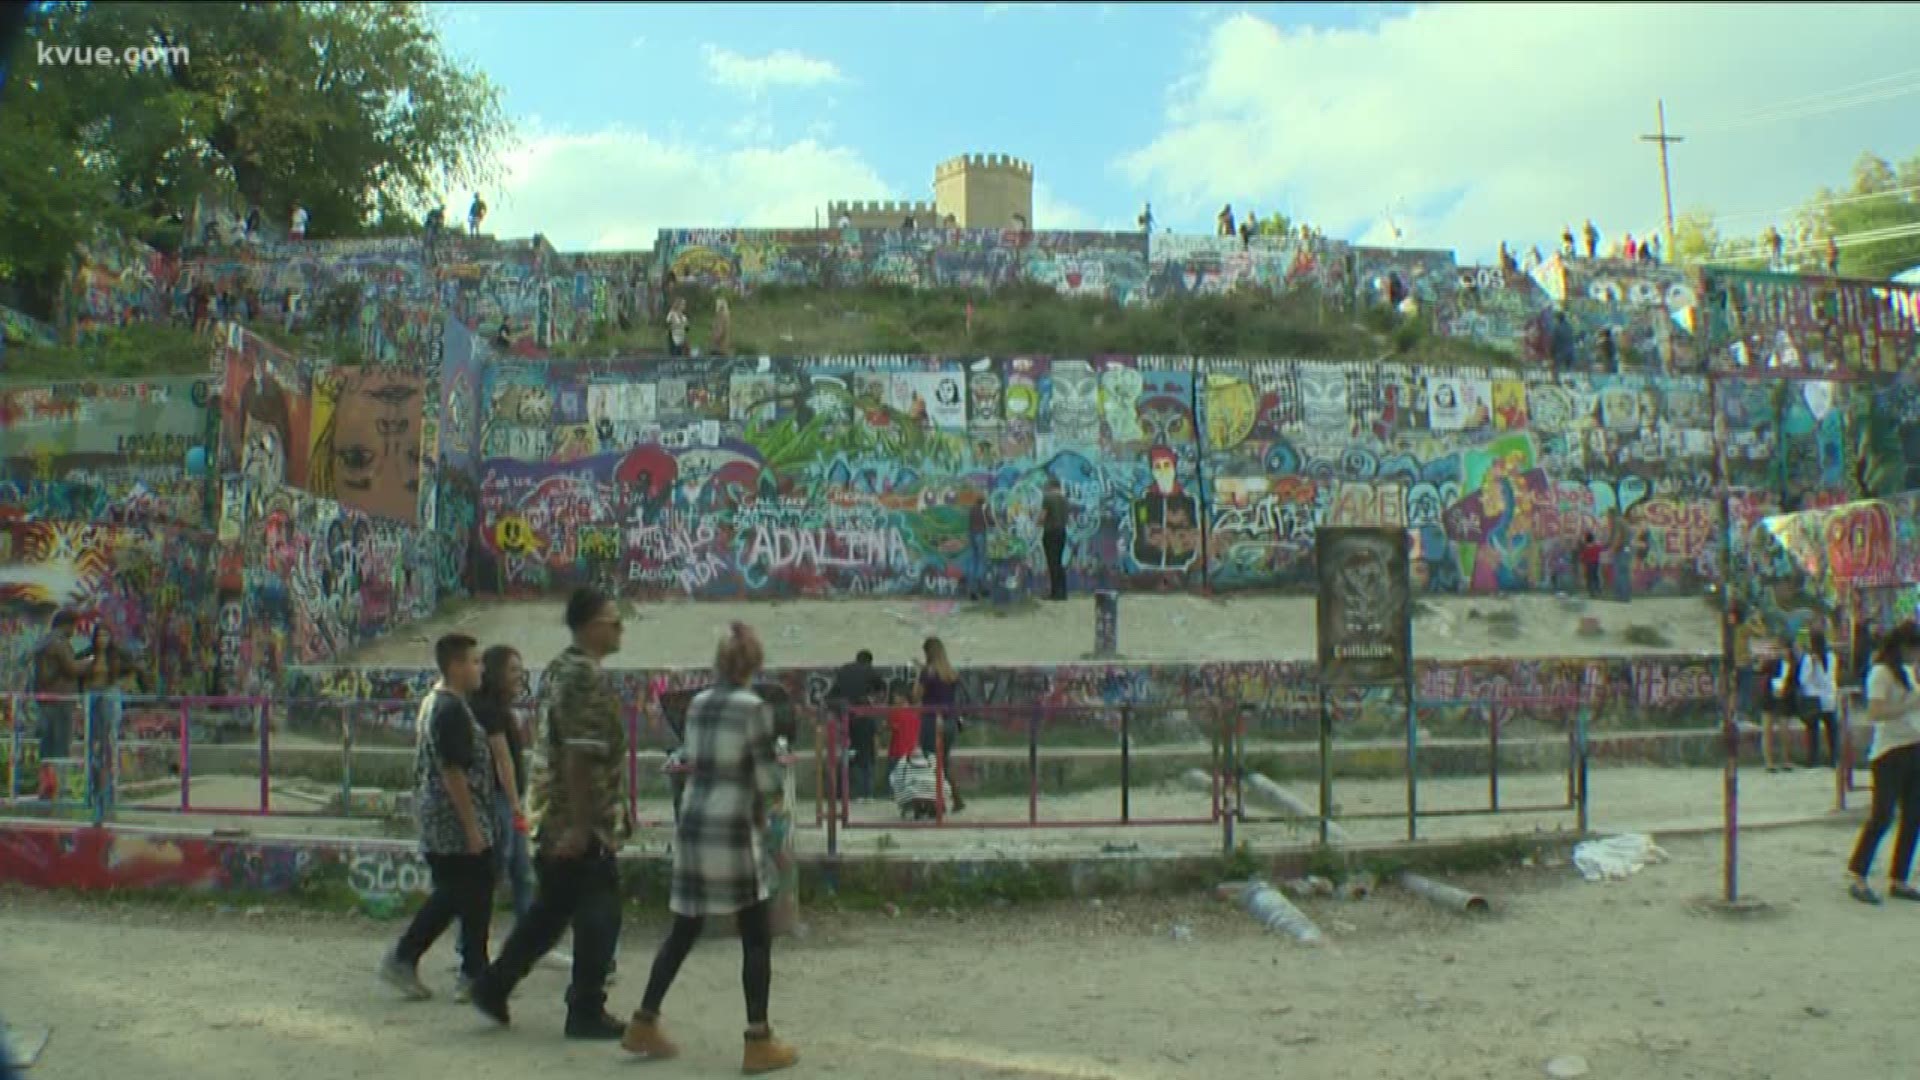 Austin's popular graffiti park is now closed.